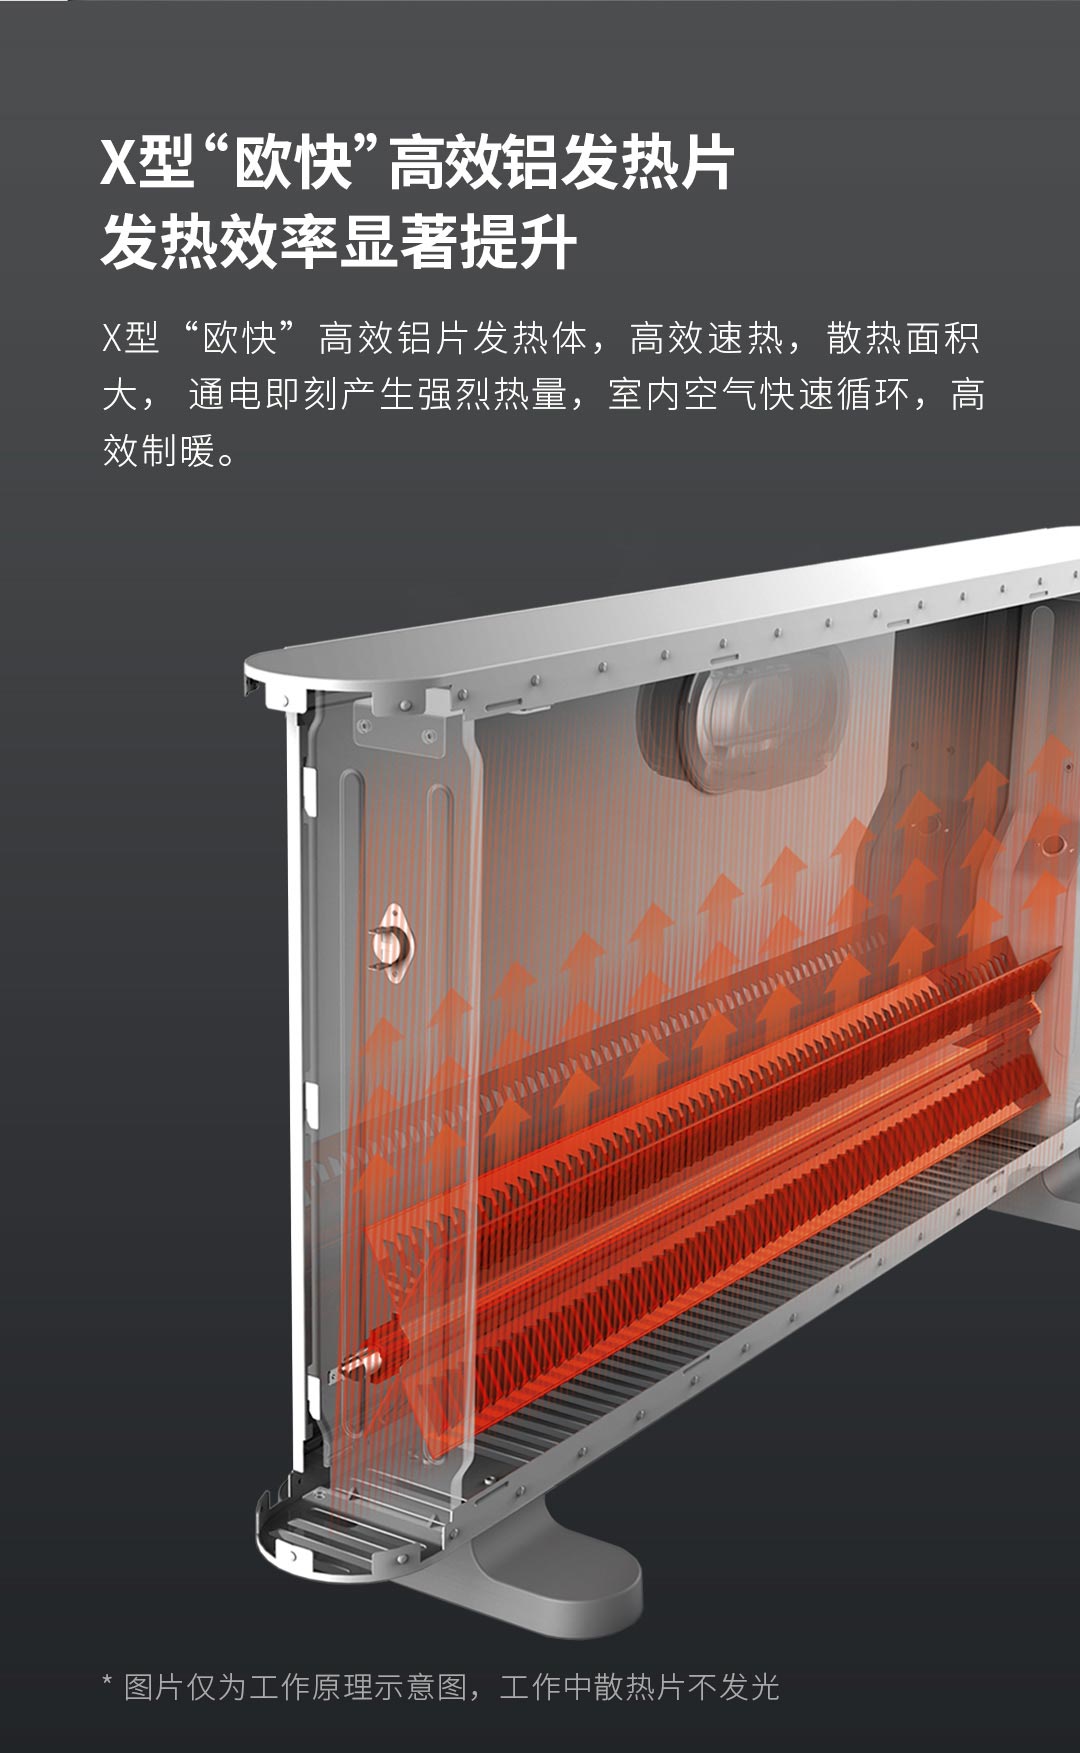 Smart space heater s. Mijia Electric Heater. Обогреватель Сяоми. Xiaomi Smartmi Electric Heater. Обогреватель Xiaomi Mijia.